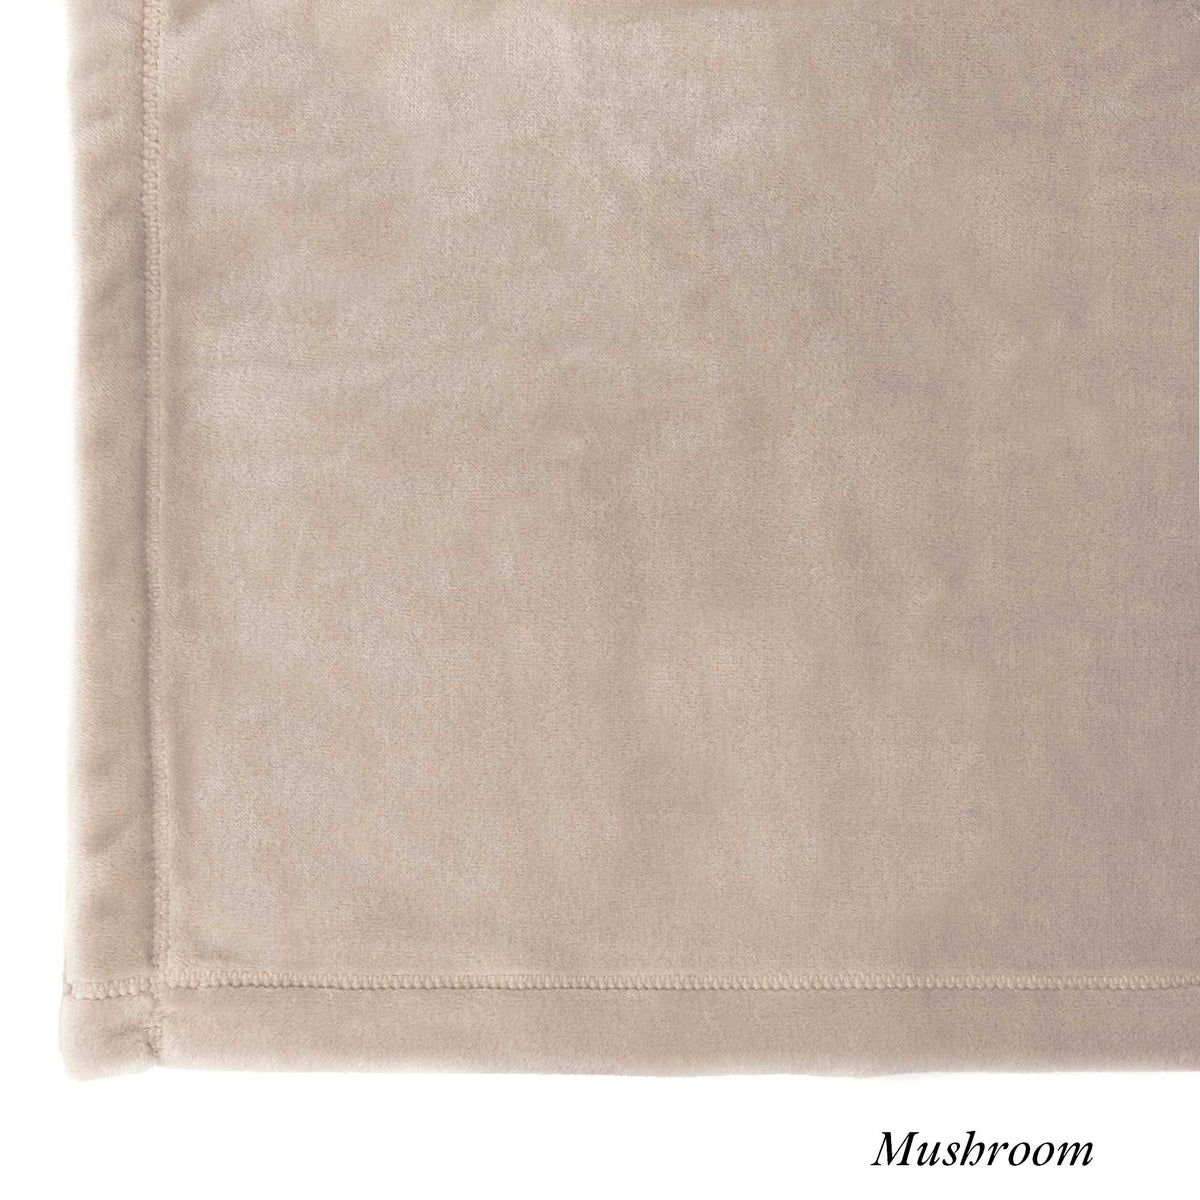 Mushroom Luster Loft Swatch  - Fleece Fitted Sheet - Luster Loft - American Blanket Company